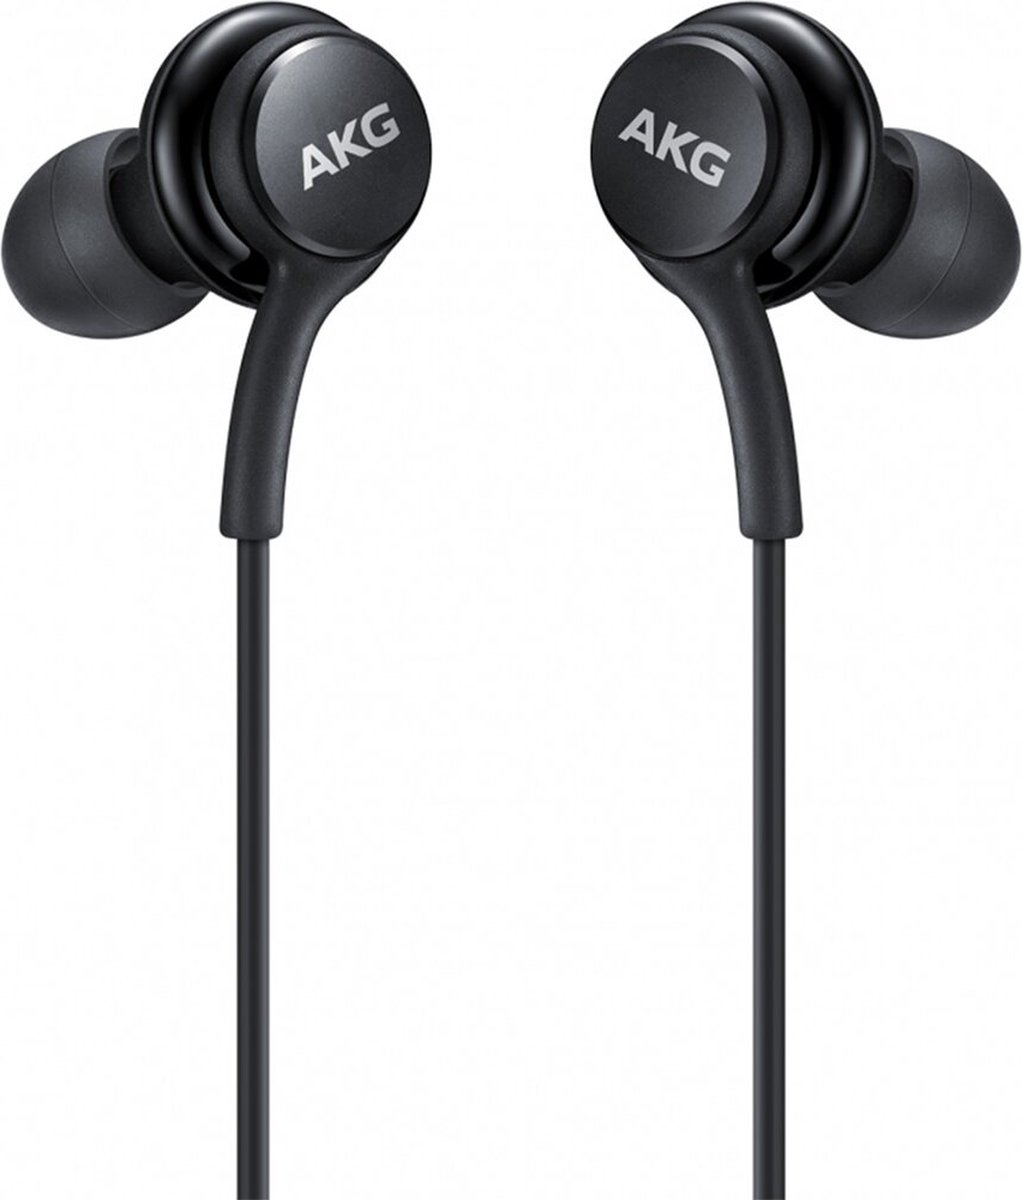 Samsung Industry Packaged AKG Type-C Earphones - Oordopjes USB-C aansluiting - Zwart